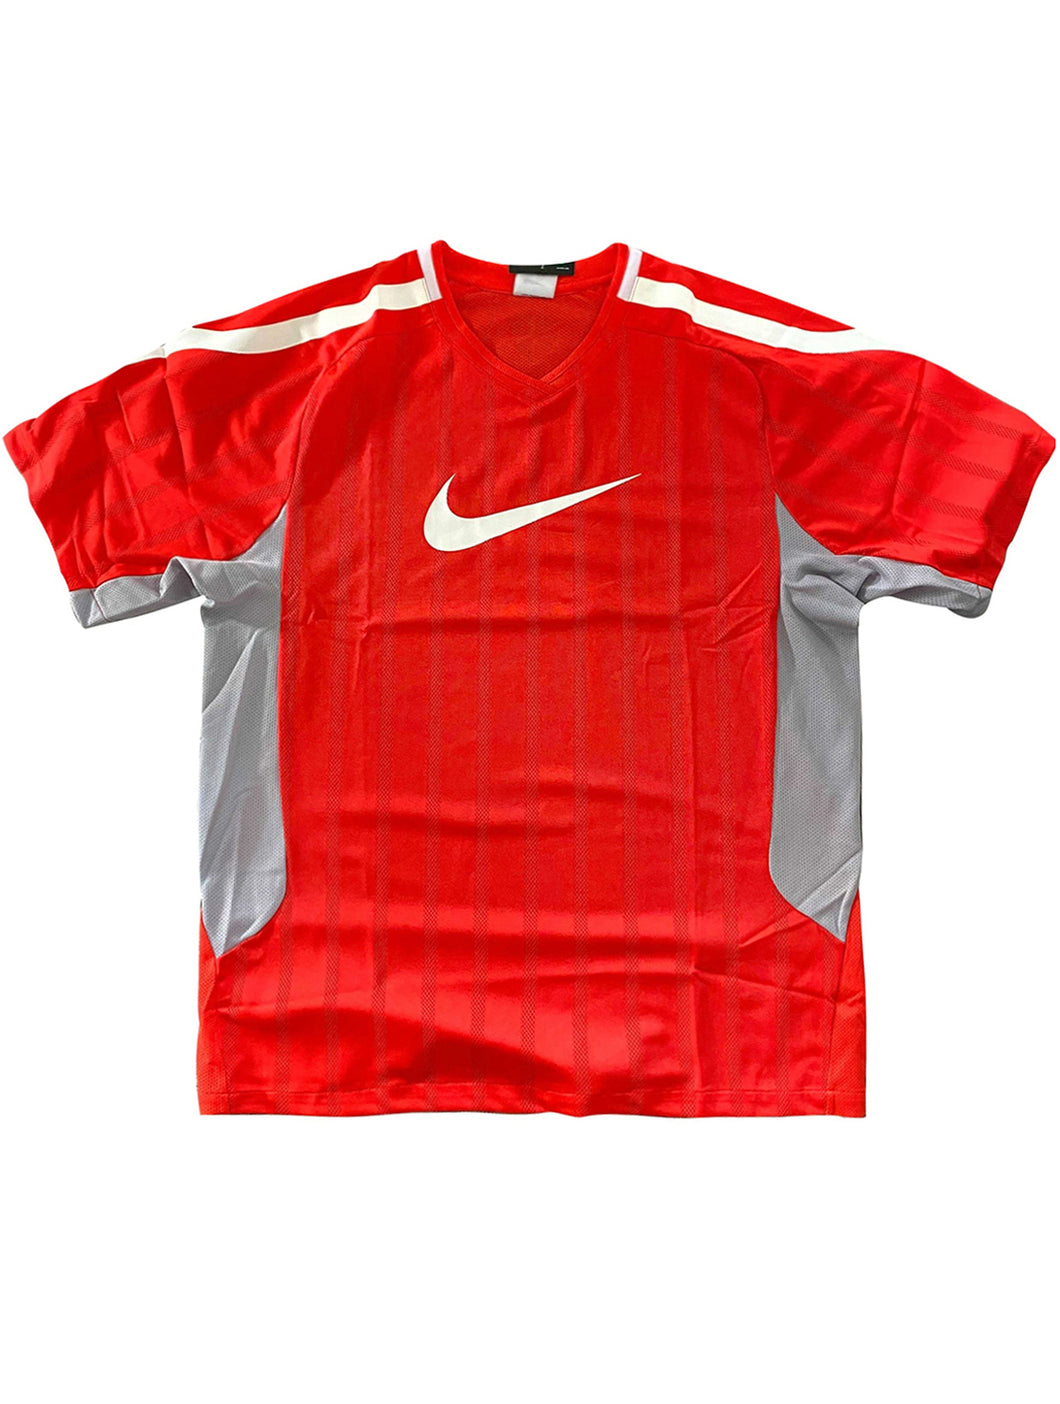 Nike Sports Red Shirt